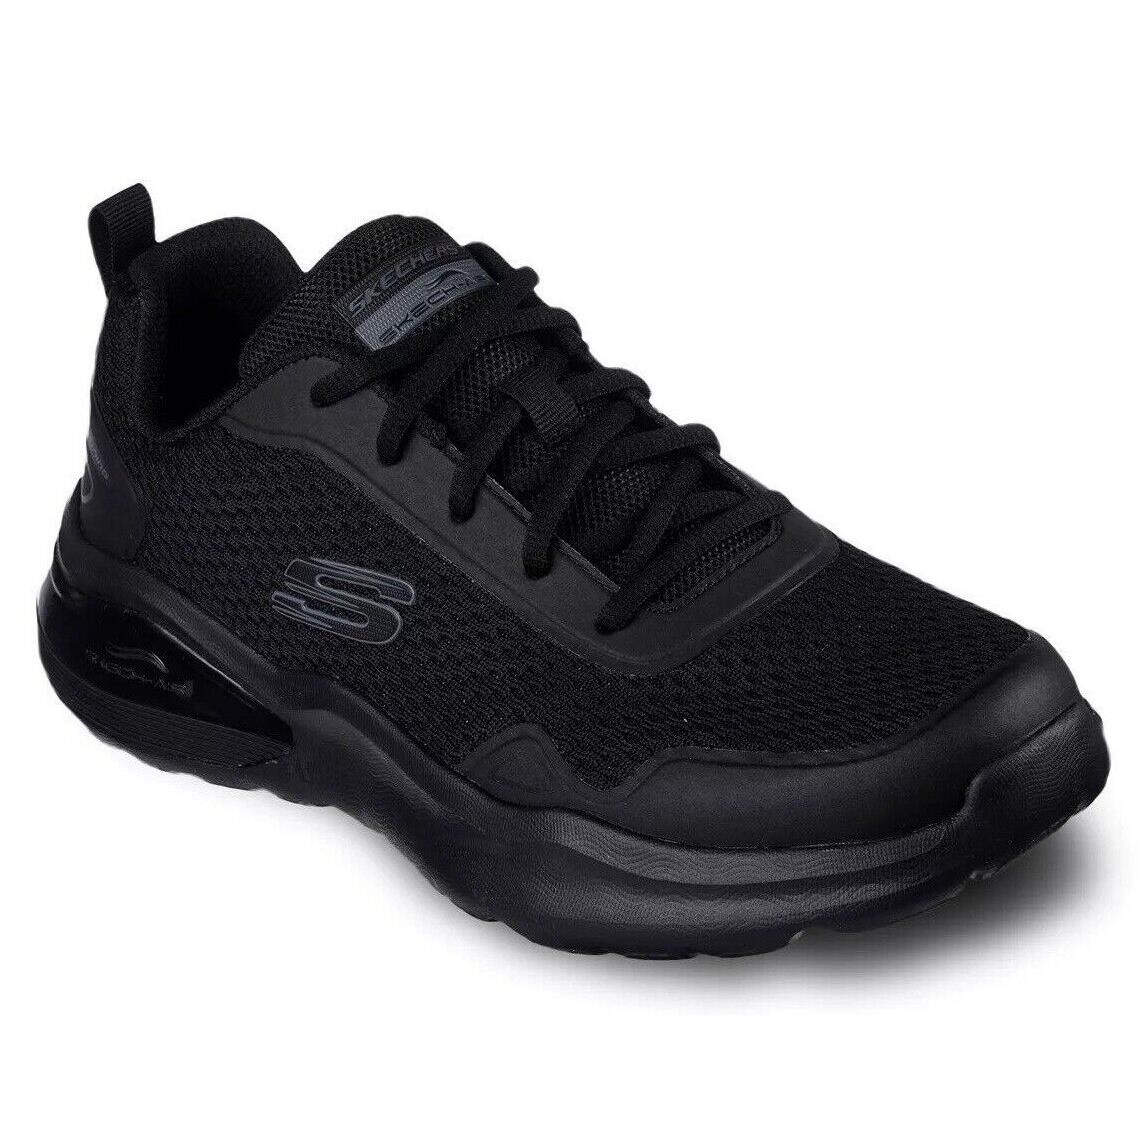 Mens Skechers Air Cushioning Citro Athletic Shoes 232562 /bbk Multi Sizes Black